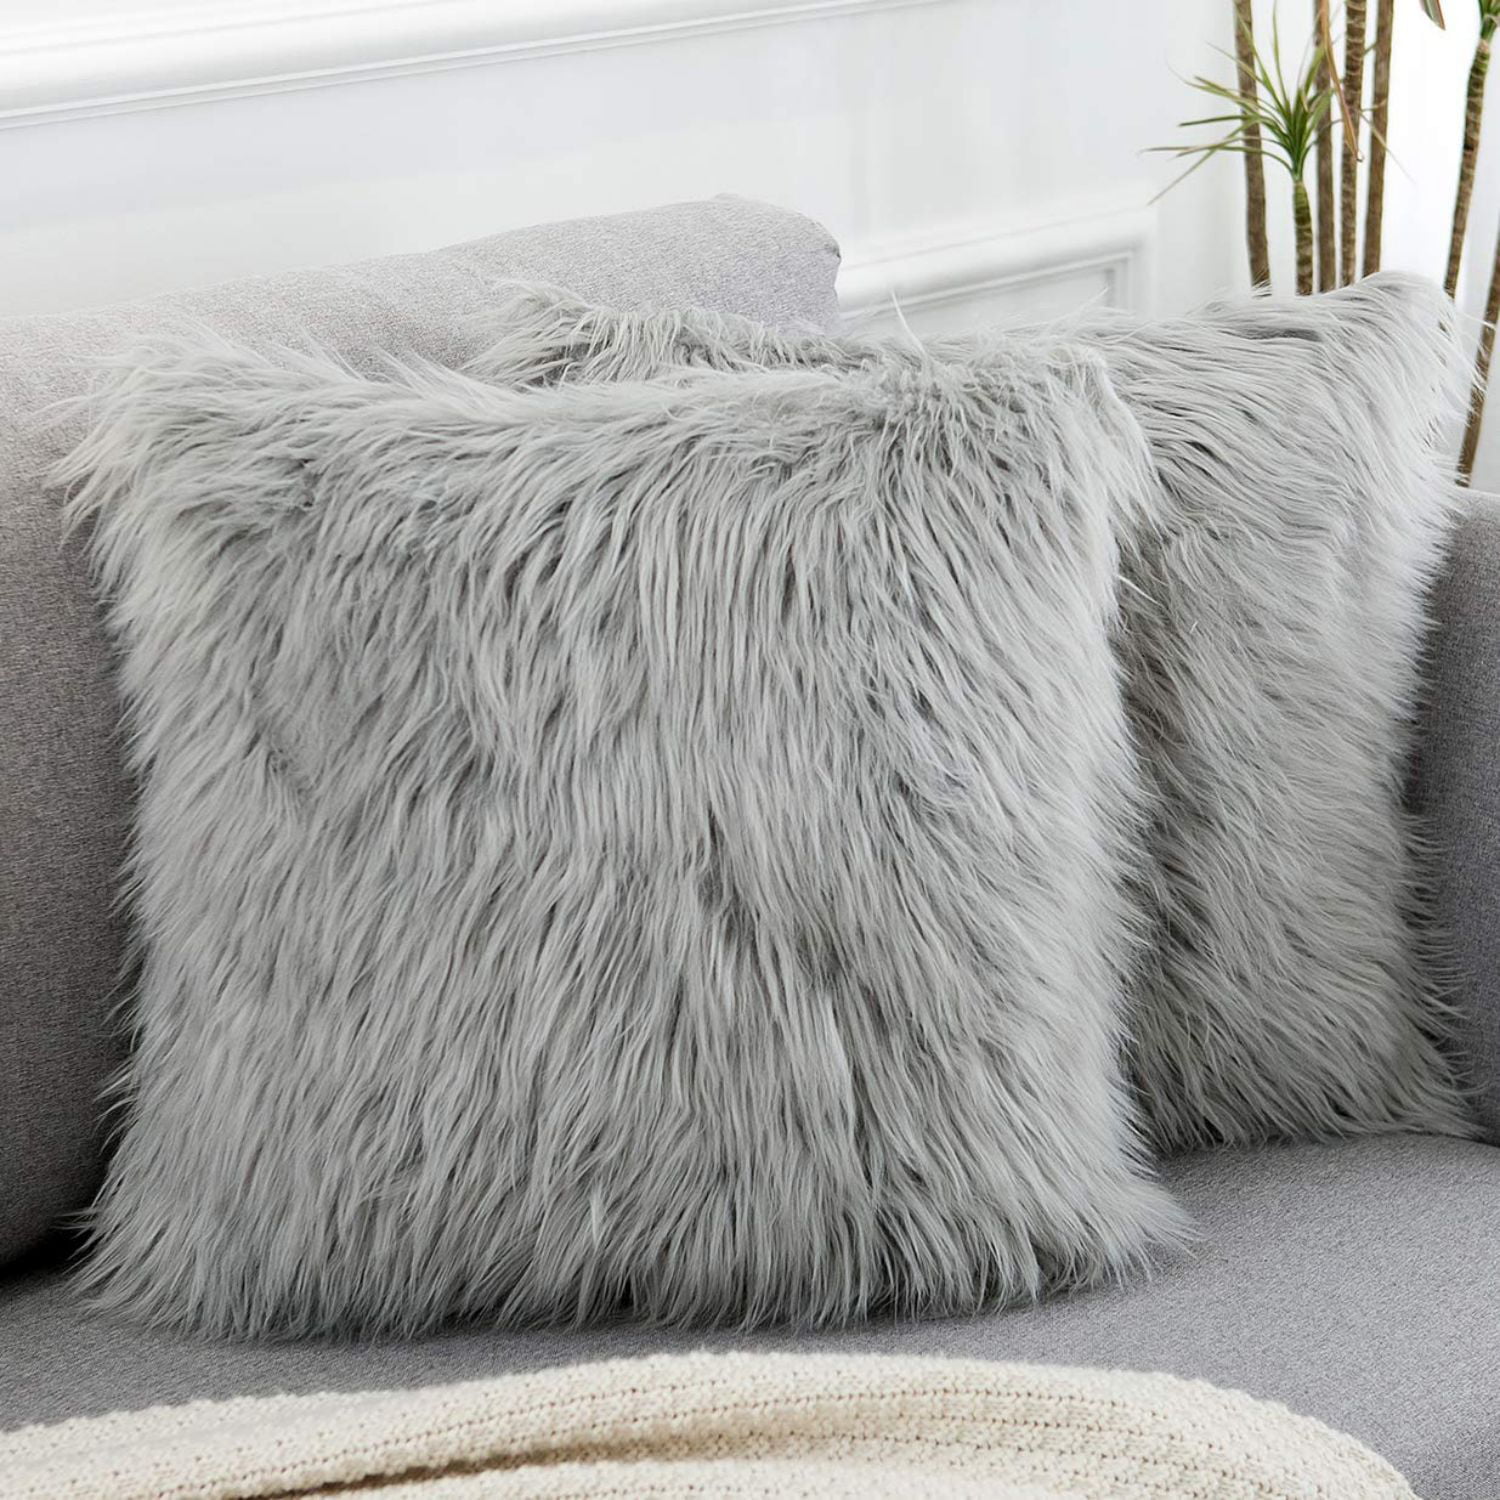 TIDWIACE Set of 2 Fluffy Soft Square Pillow covers Luxury Faux Fur Whtie 40x40cm Throw Decorative Pillow Cover Plush Pillow Case Faux Fur Cushion Covers For Livingroom Sofa Bedroom Car 